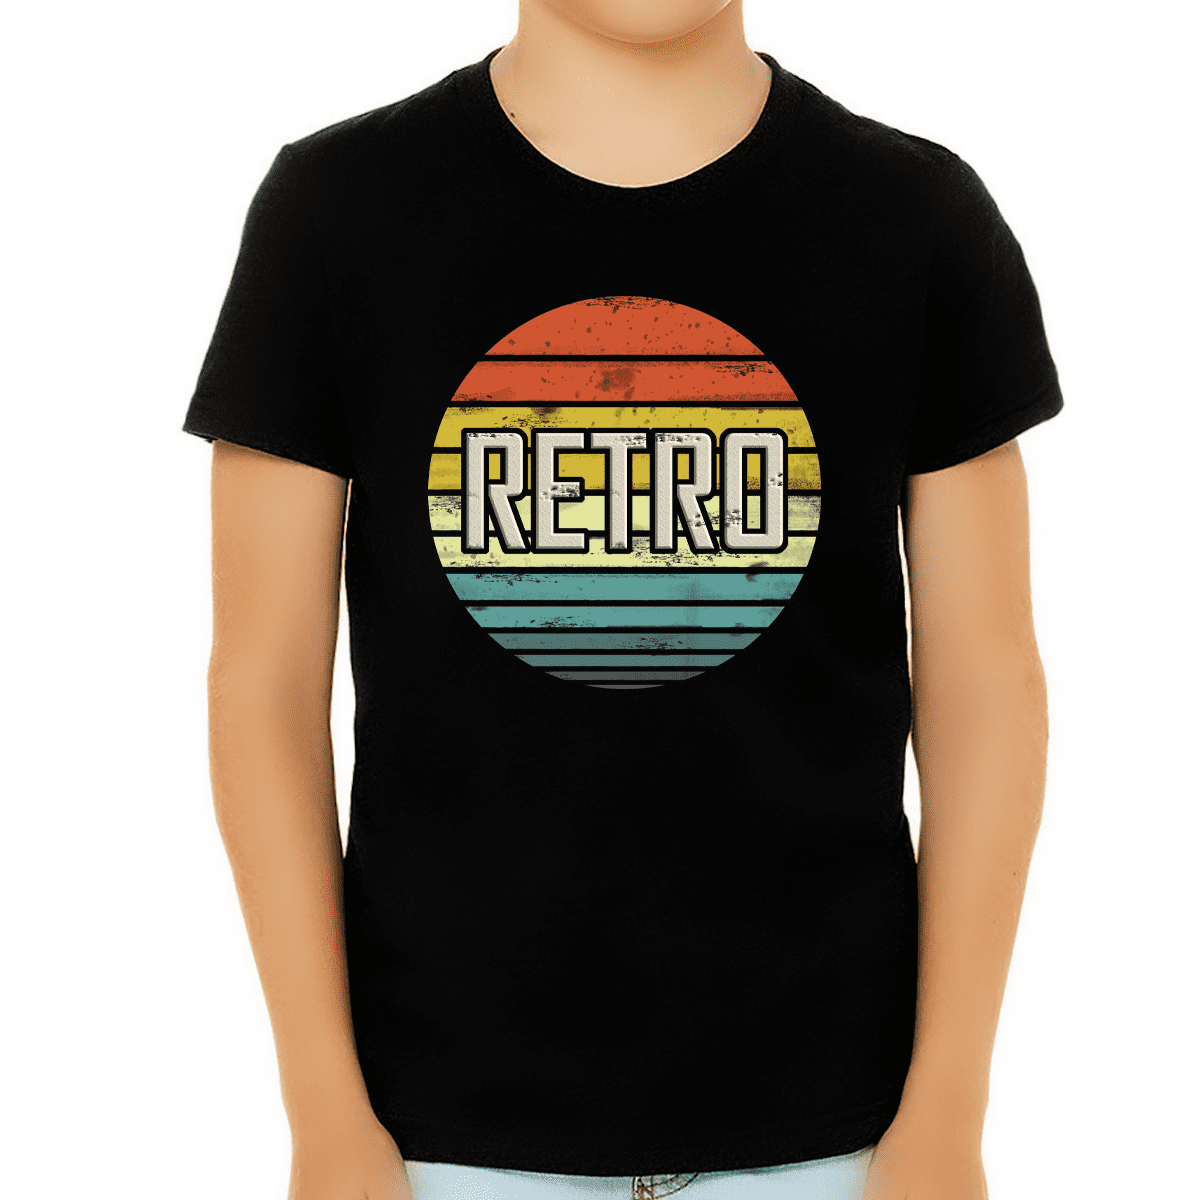 Retro Vintage Tees for Boys Retro Clothes Vintage T Shirts Retro Shirts for  Boys Graphic Tees Vintage